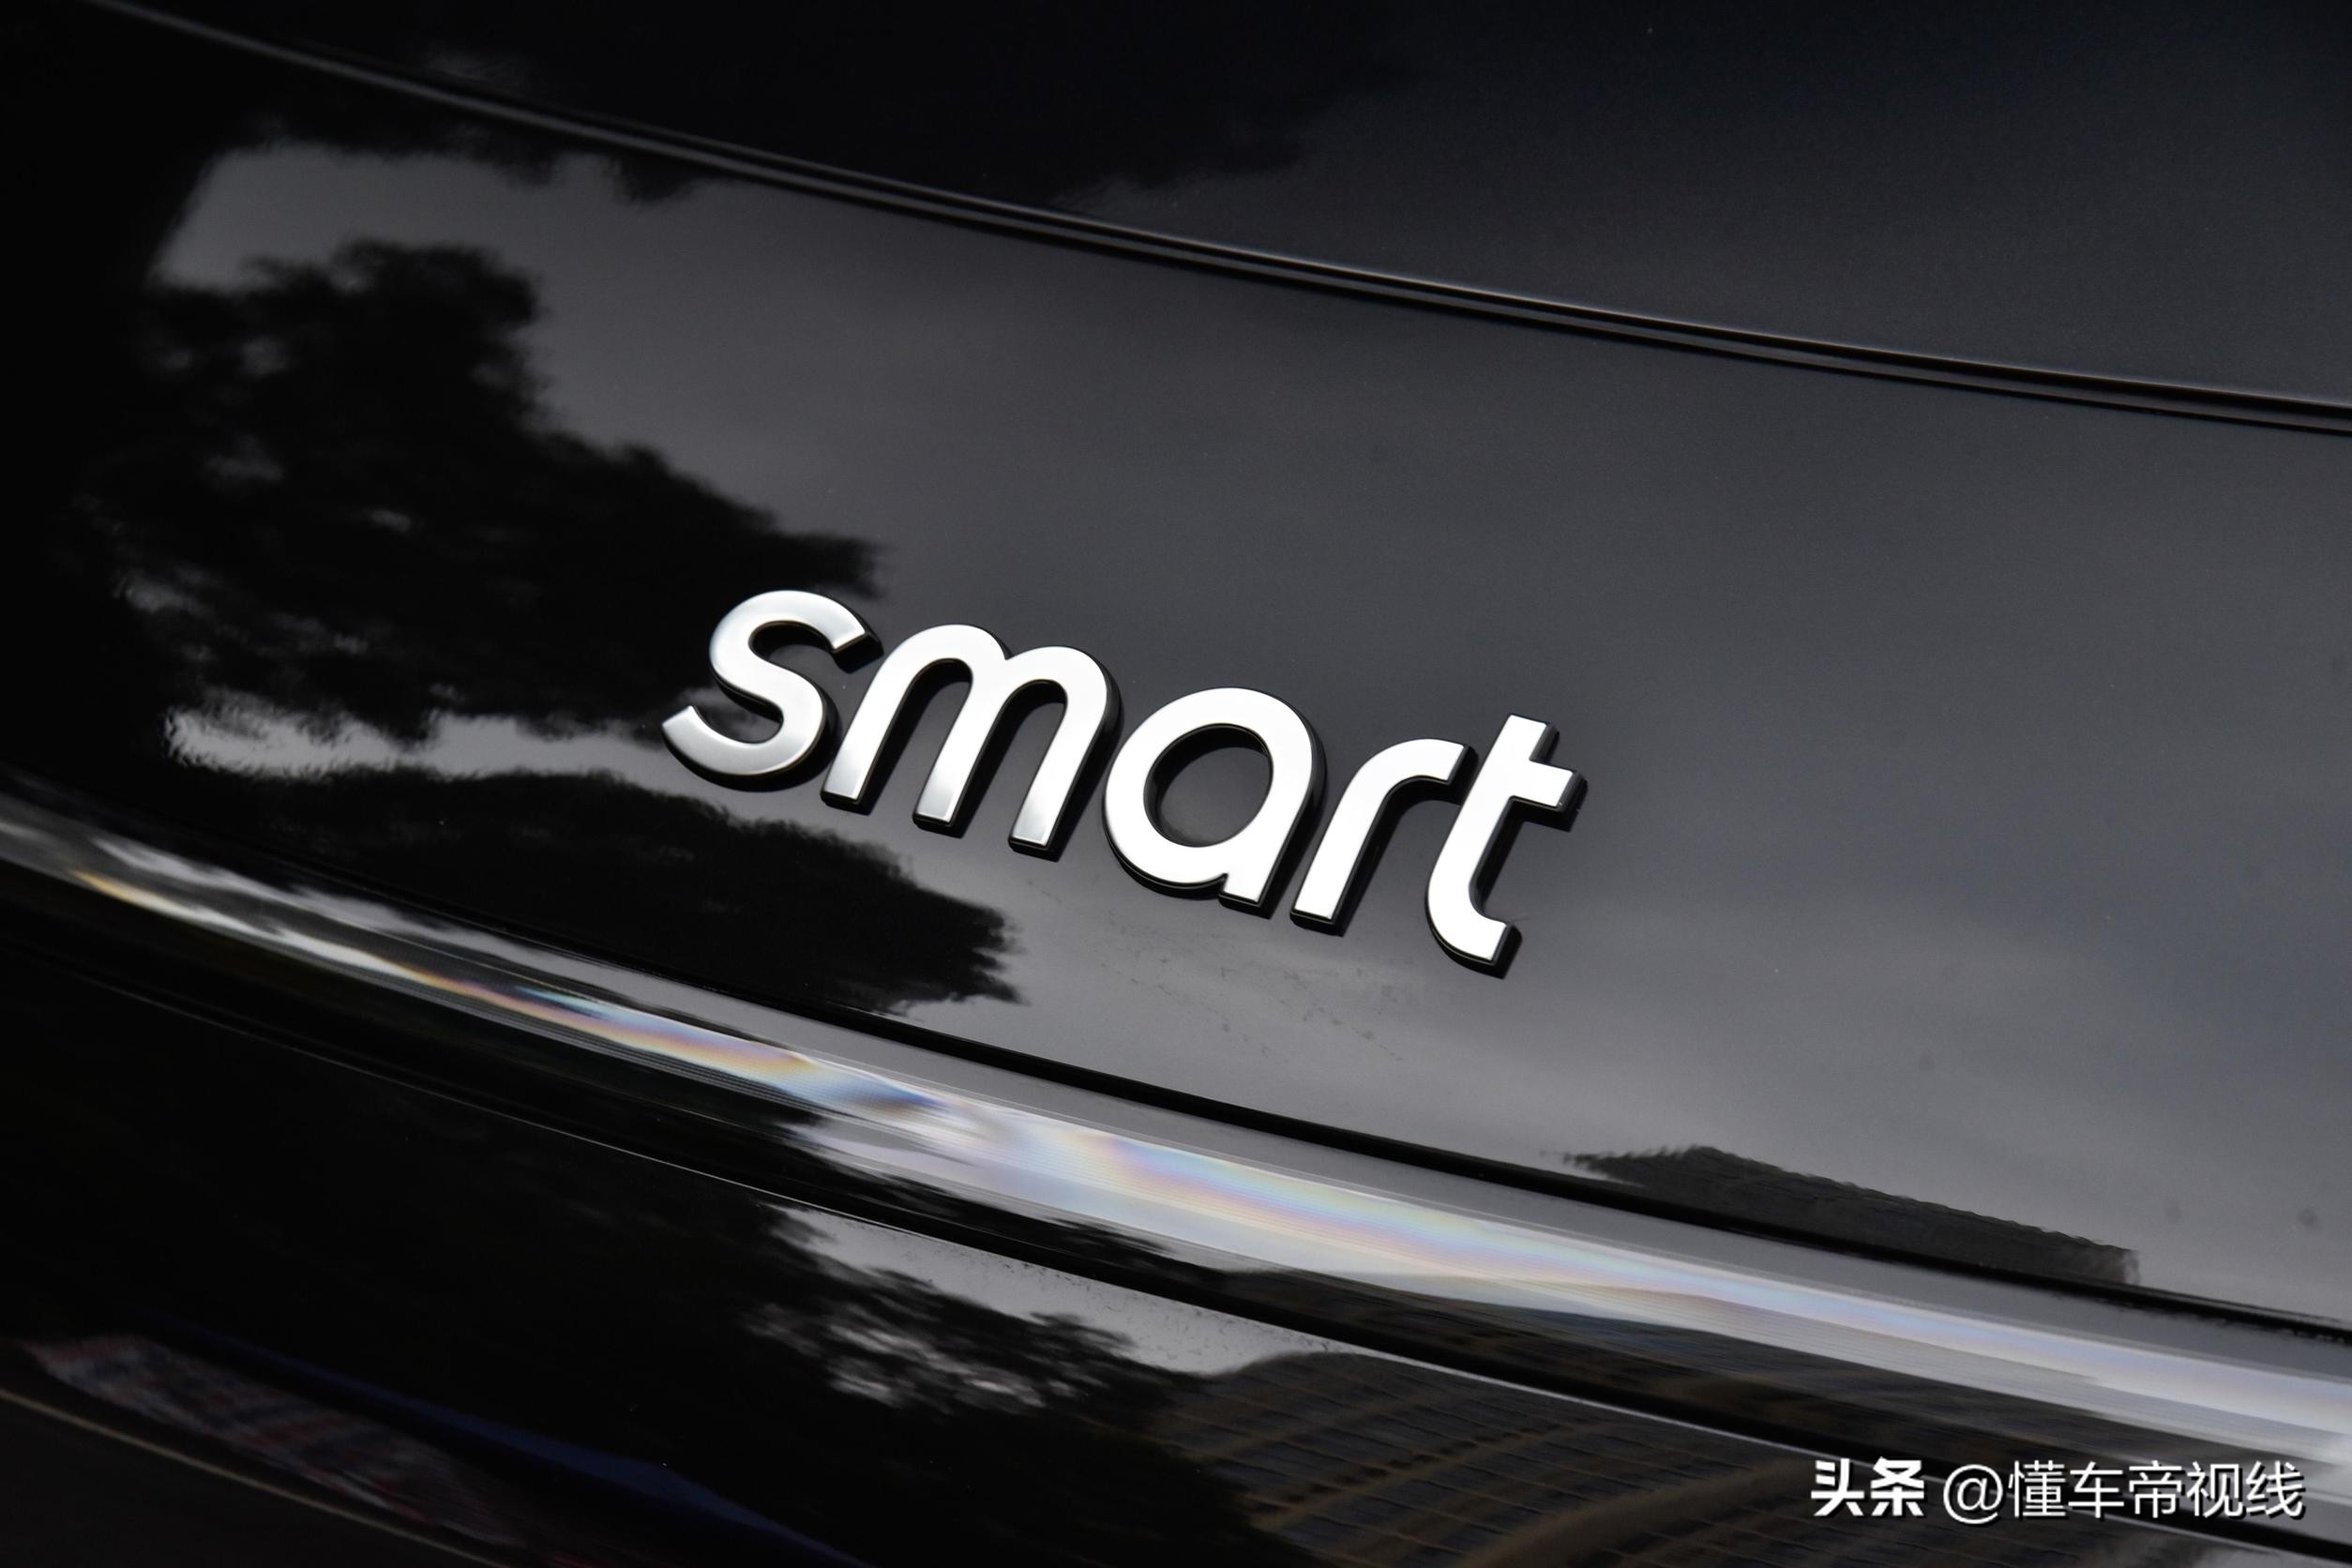 smart 计划募集 2.5-3 亿美元 A 轮融资，天齐锂业领投